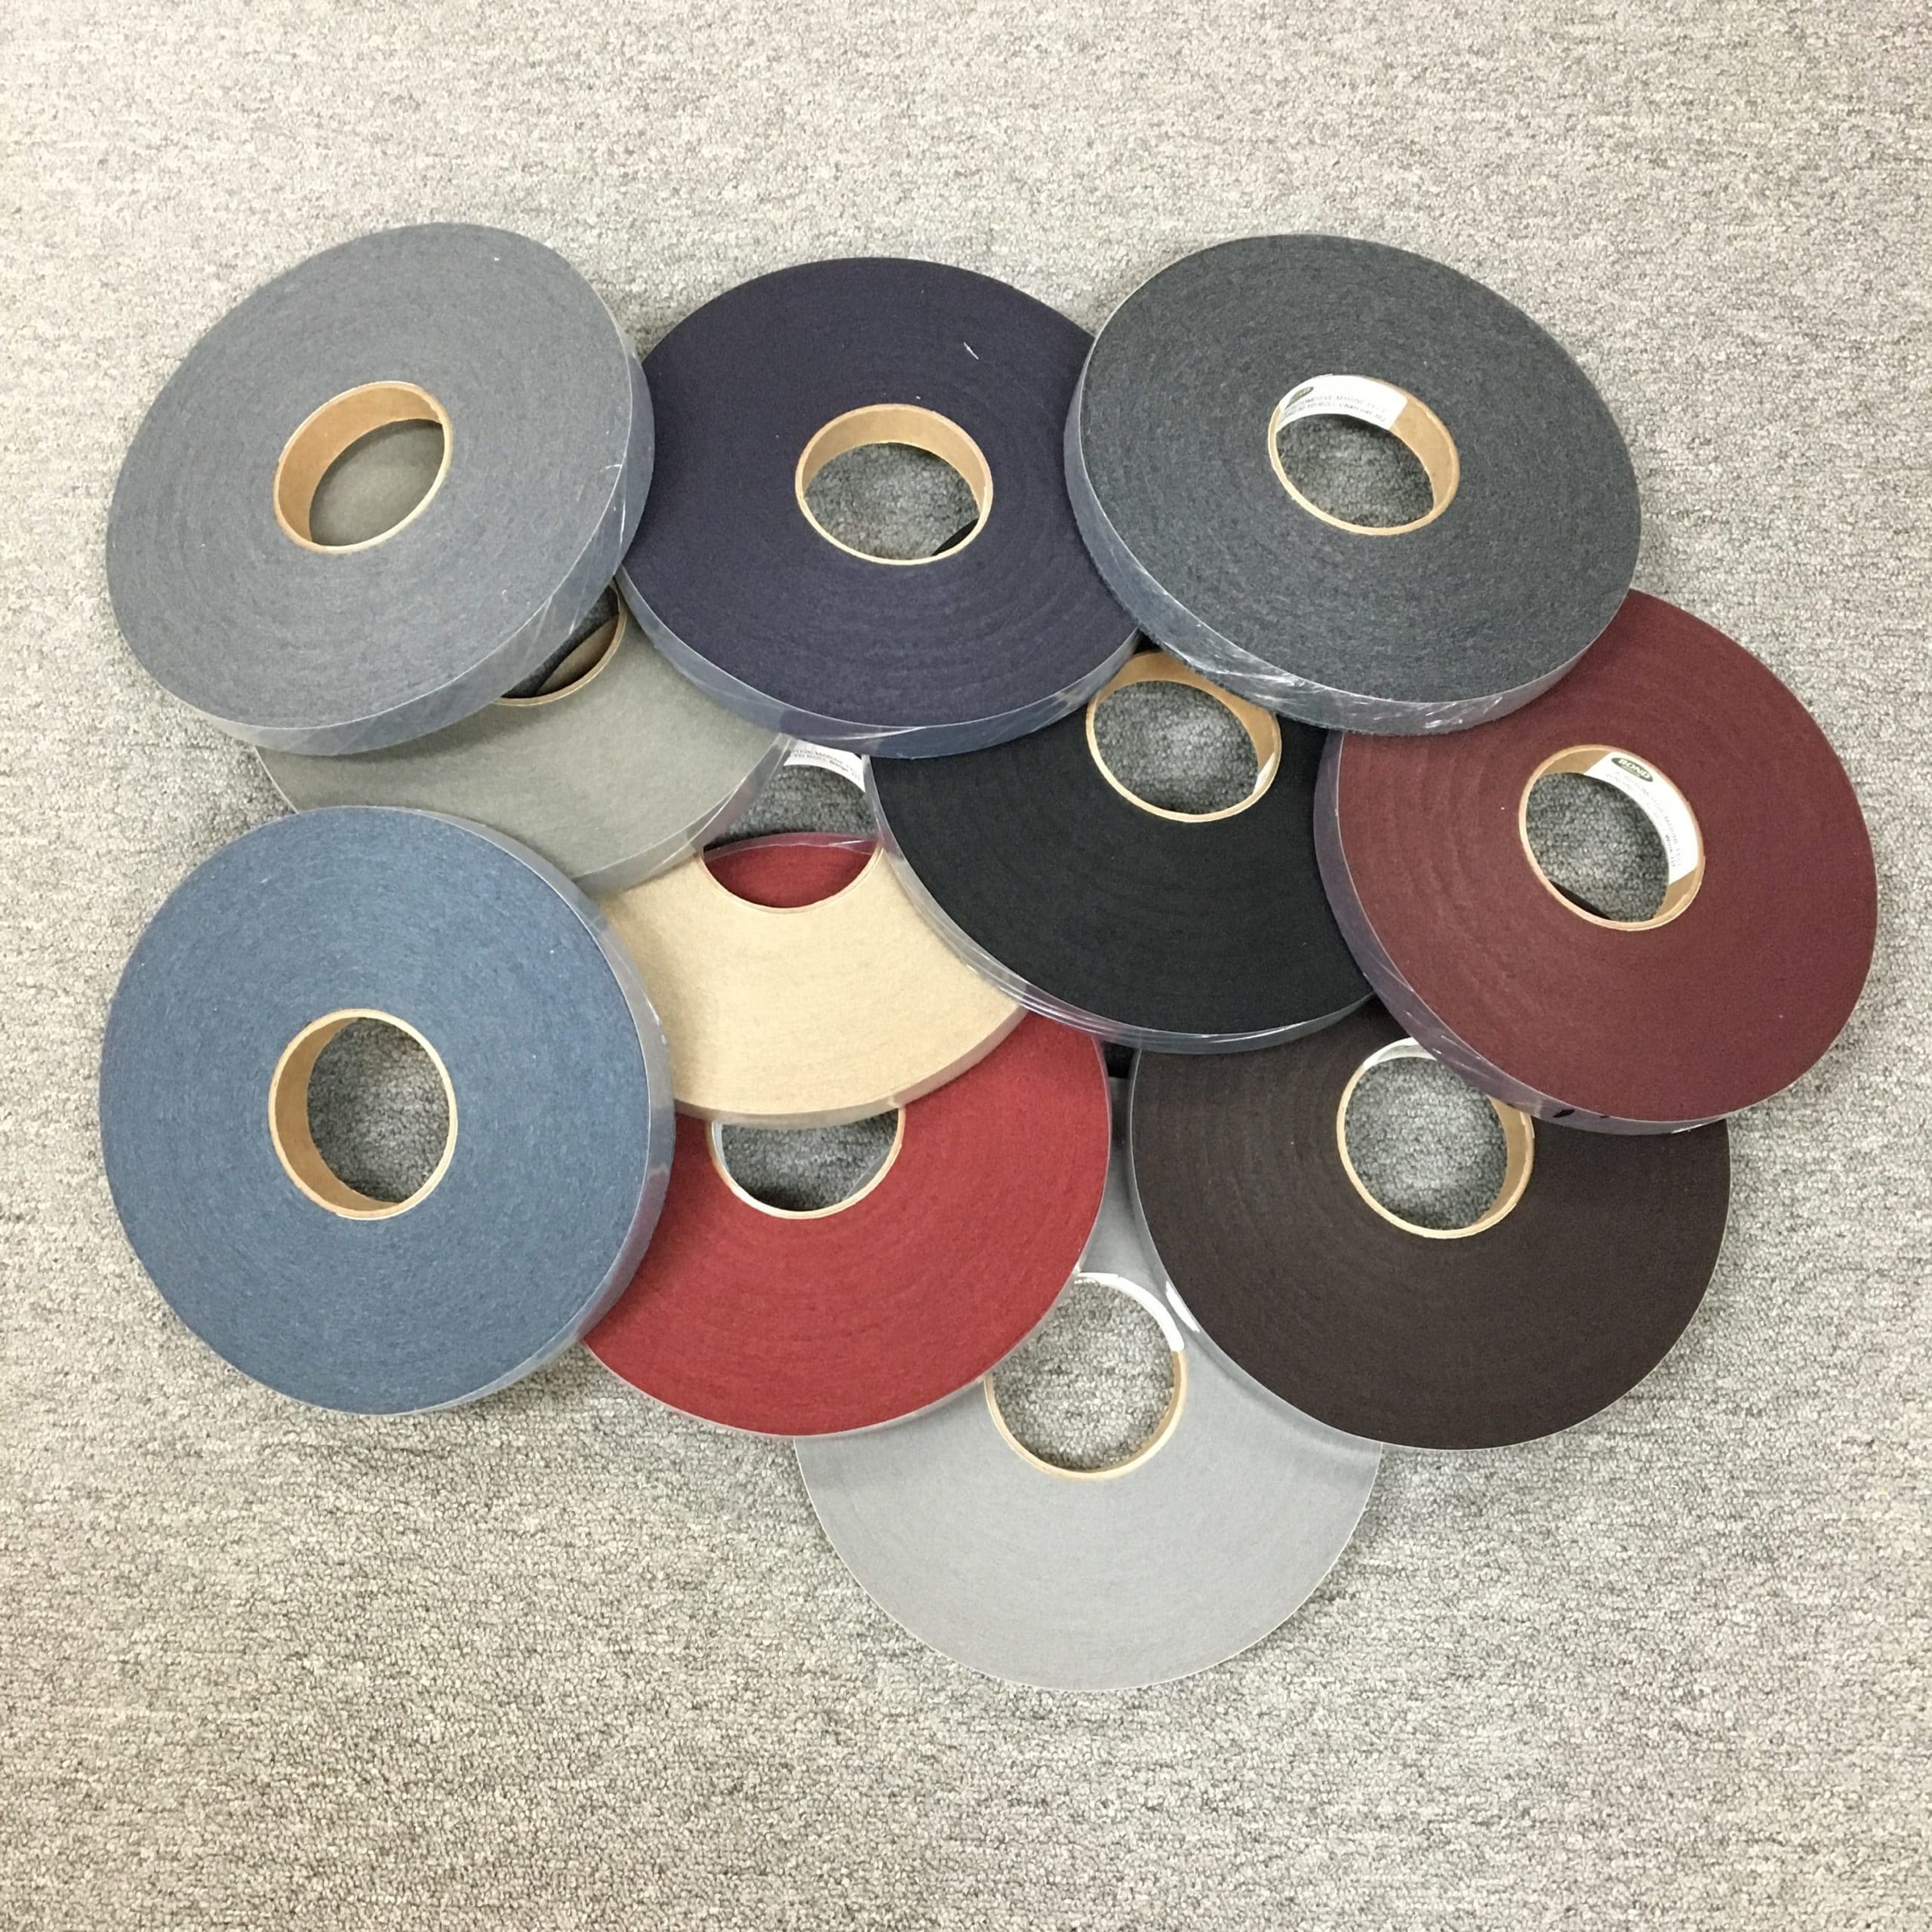 Automotive Marine Felt Polyester Binding Tape 50 yd roll- BLACK 503 - Bond  Products Inc